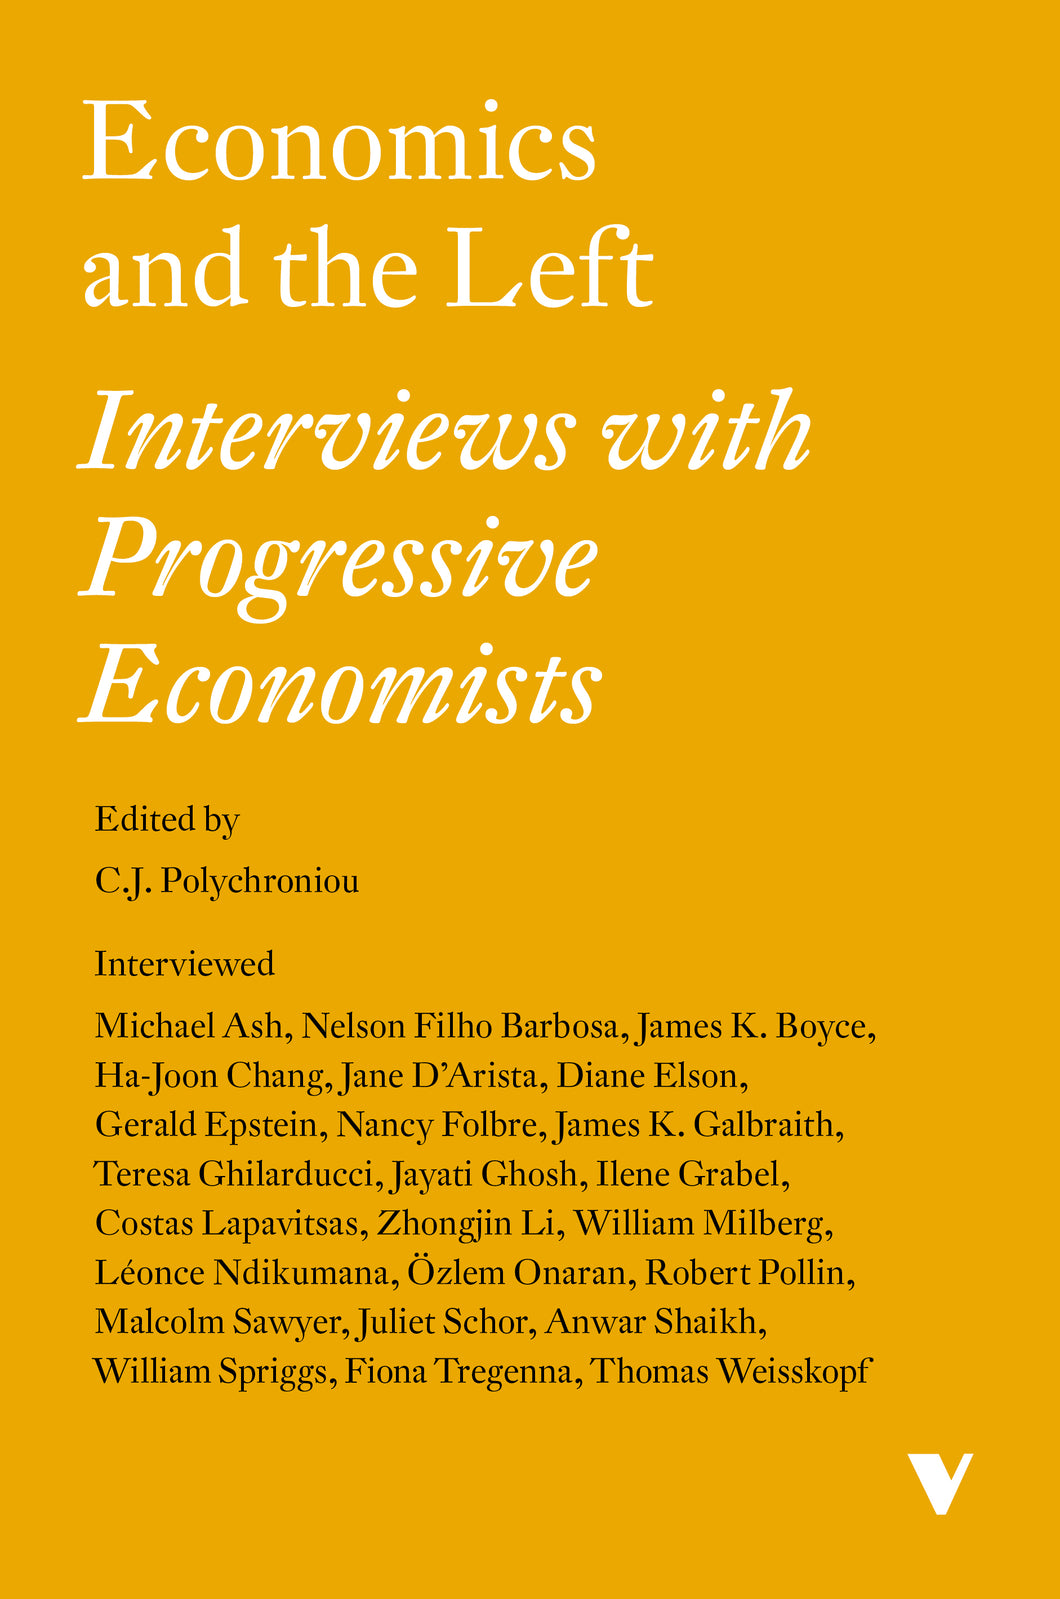 Economics and the Left : Interviews with Progressive Economists ร้านหนังสือและสิ่งของ เป็นร้านหนังสือภาษาอังกฤษหายาก และร้านกาแฟ หรือ บุ๊คคาเฟ่ ตั้งอยู่สุขุมวิท กรุงเทพ